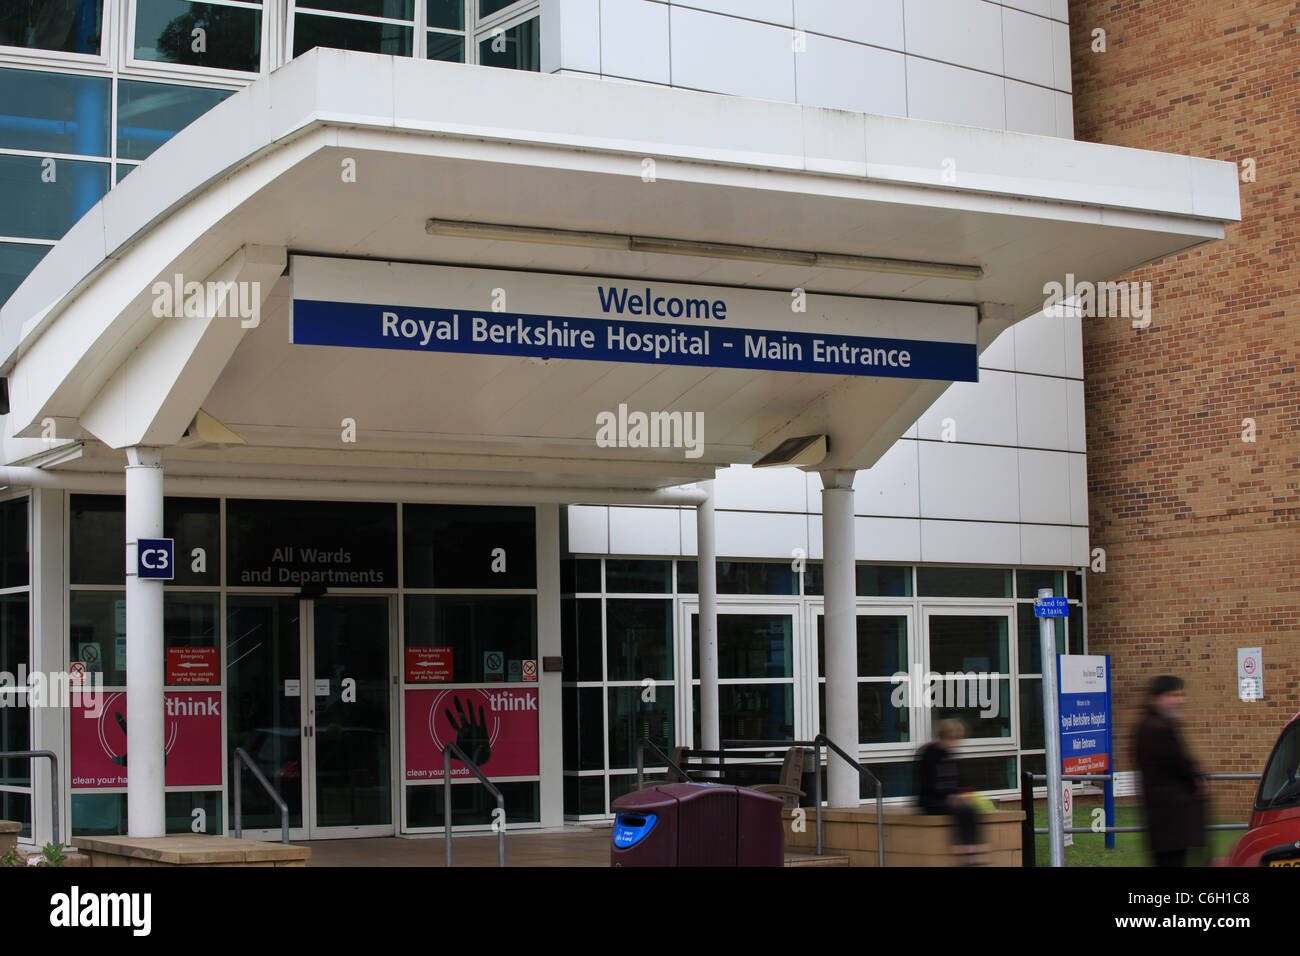 Royal Berkshire Hospital Reading NHS entrance Stock Photo